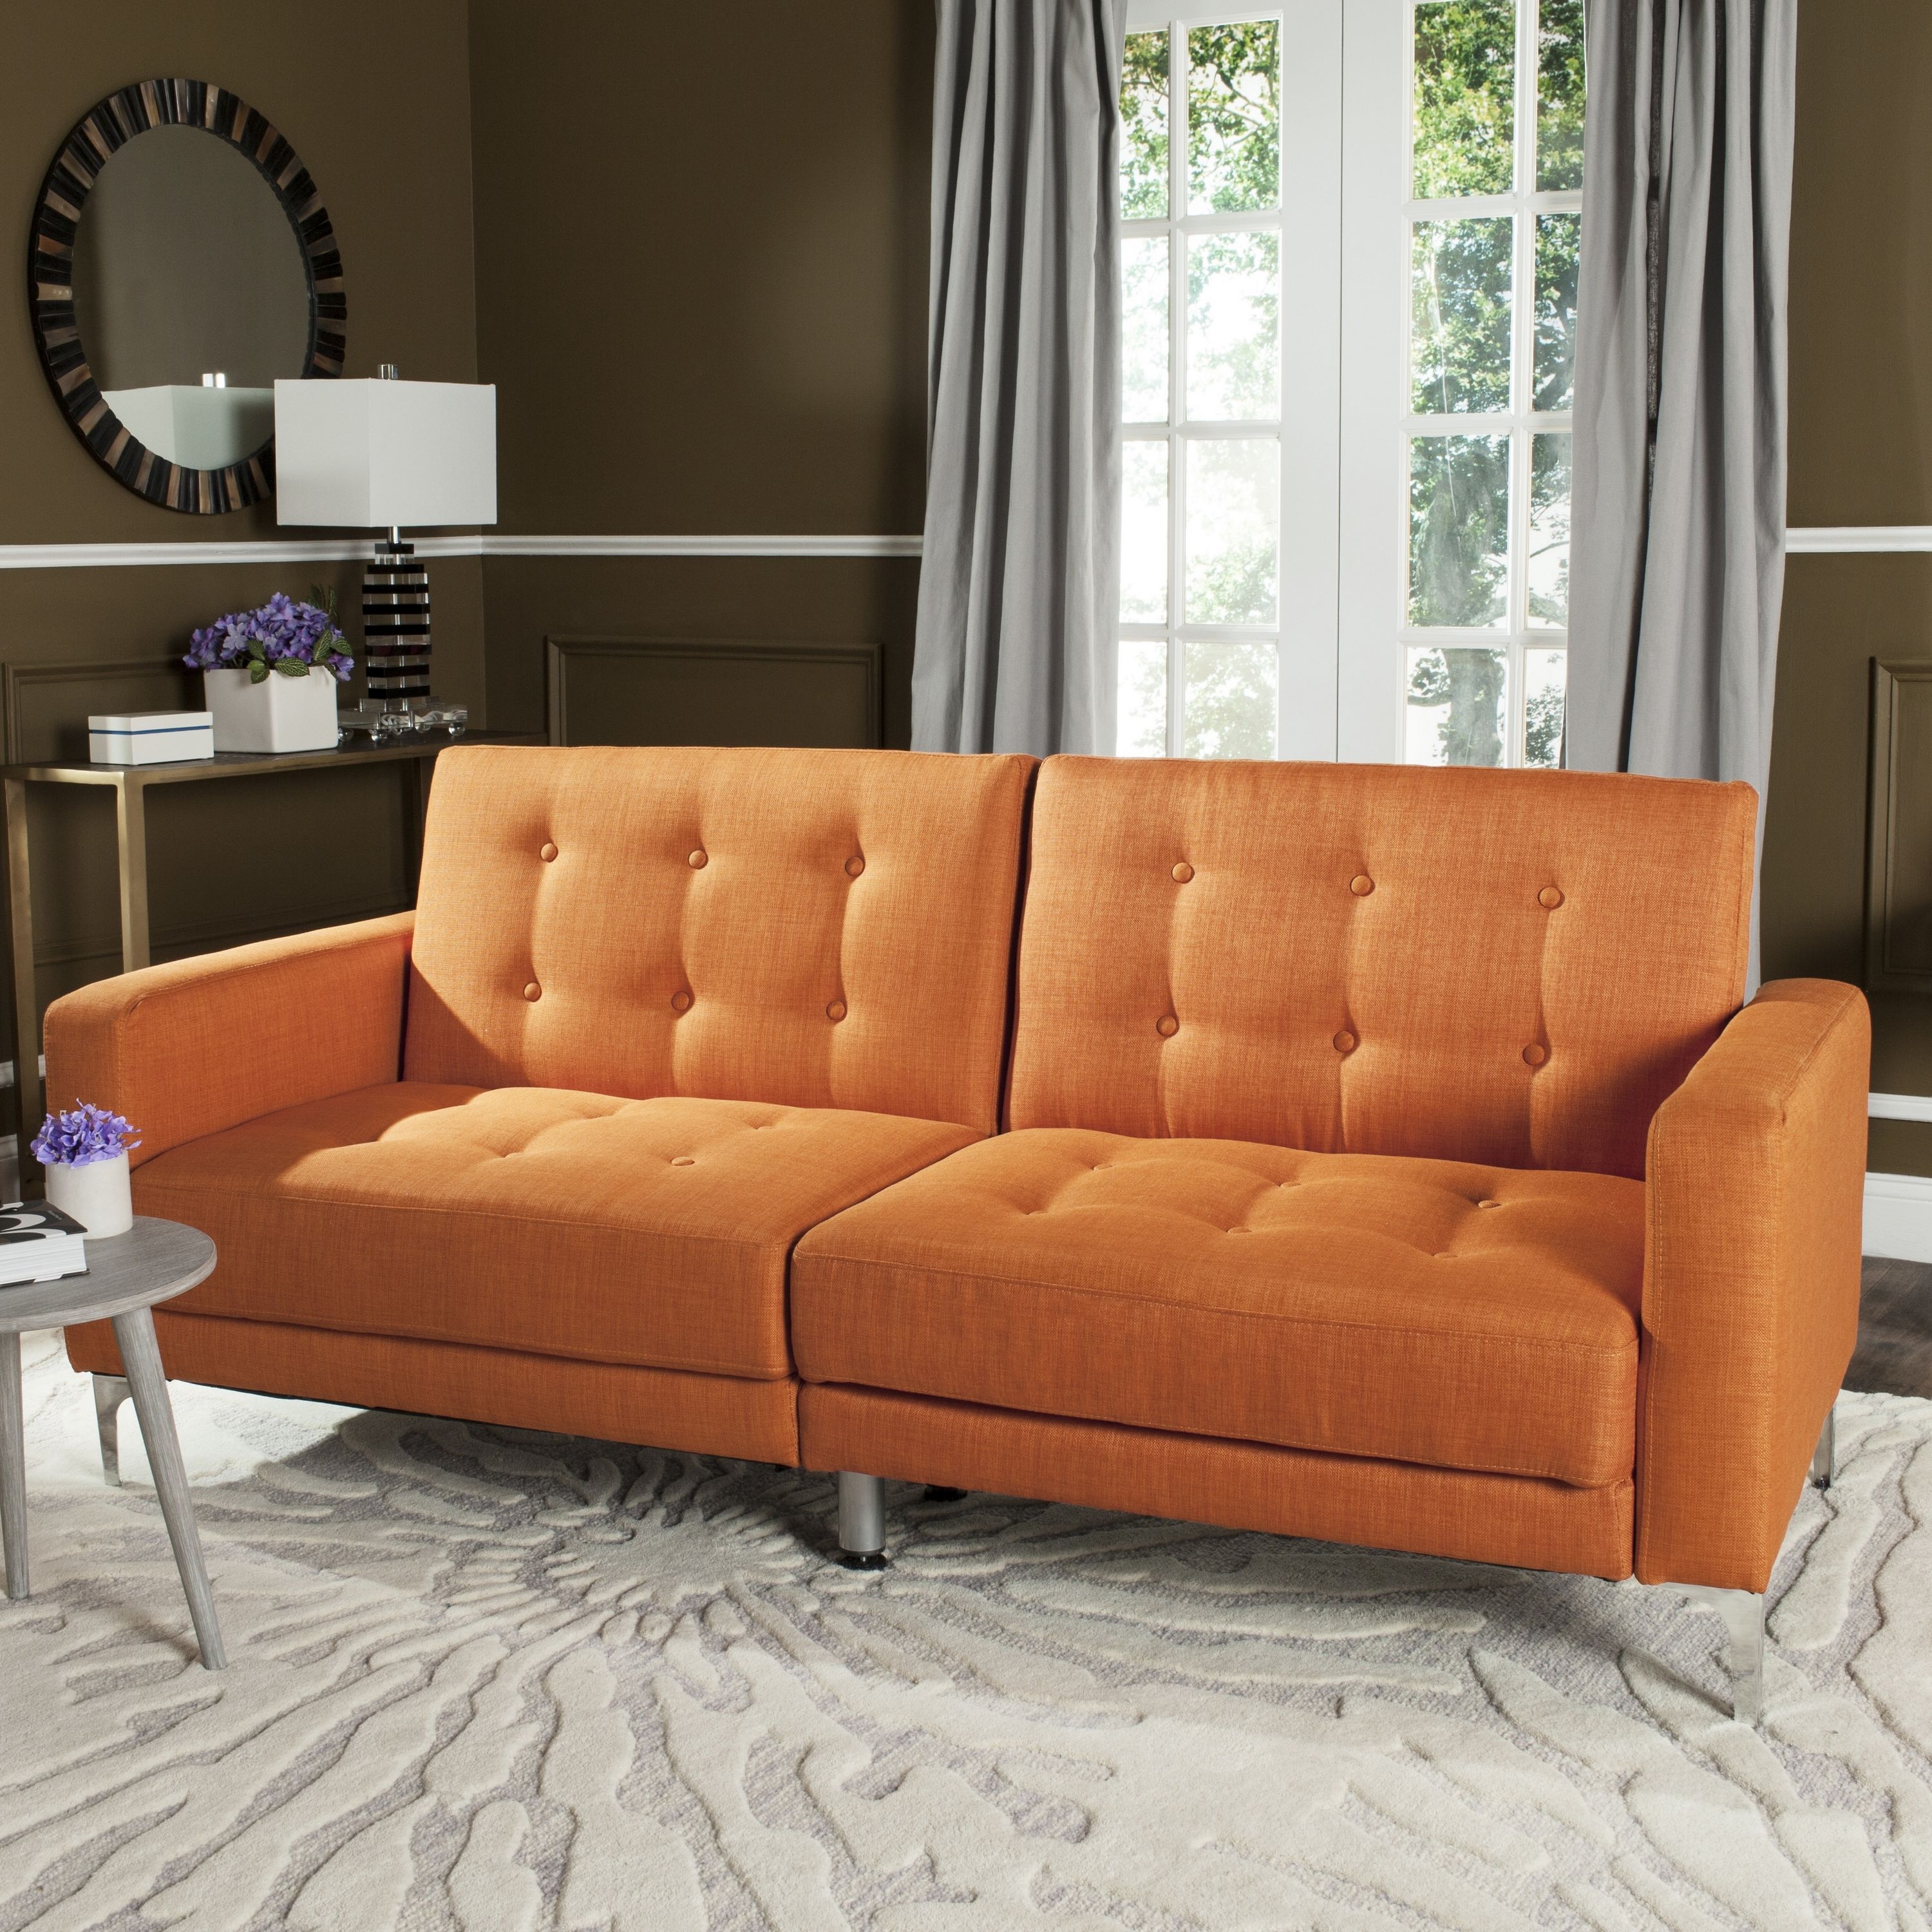 Safavieh Soho Orange Contemporary/Modern Polyester Twin Sofa Bed at ...